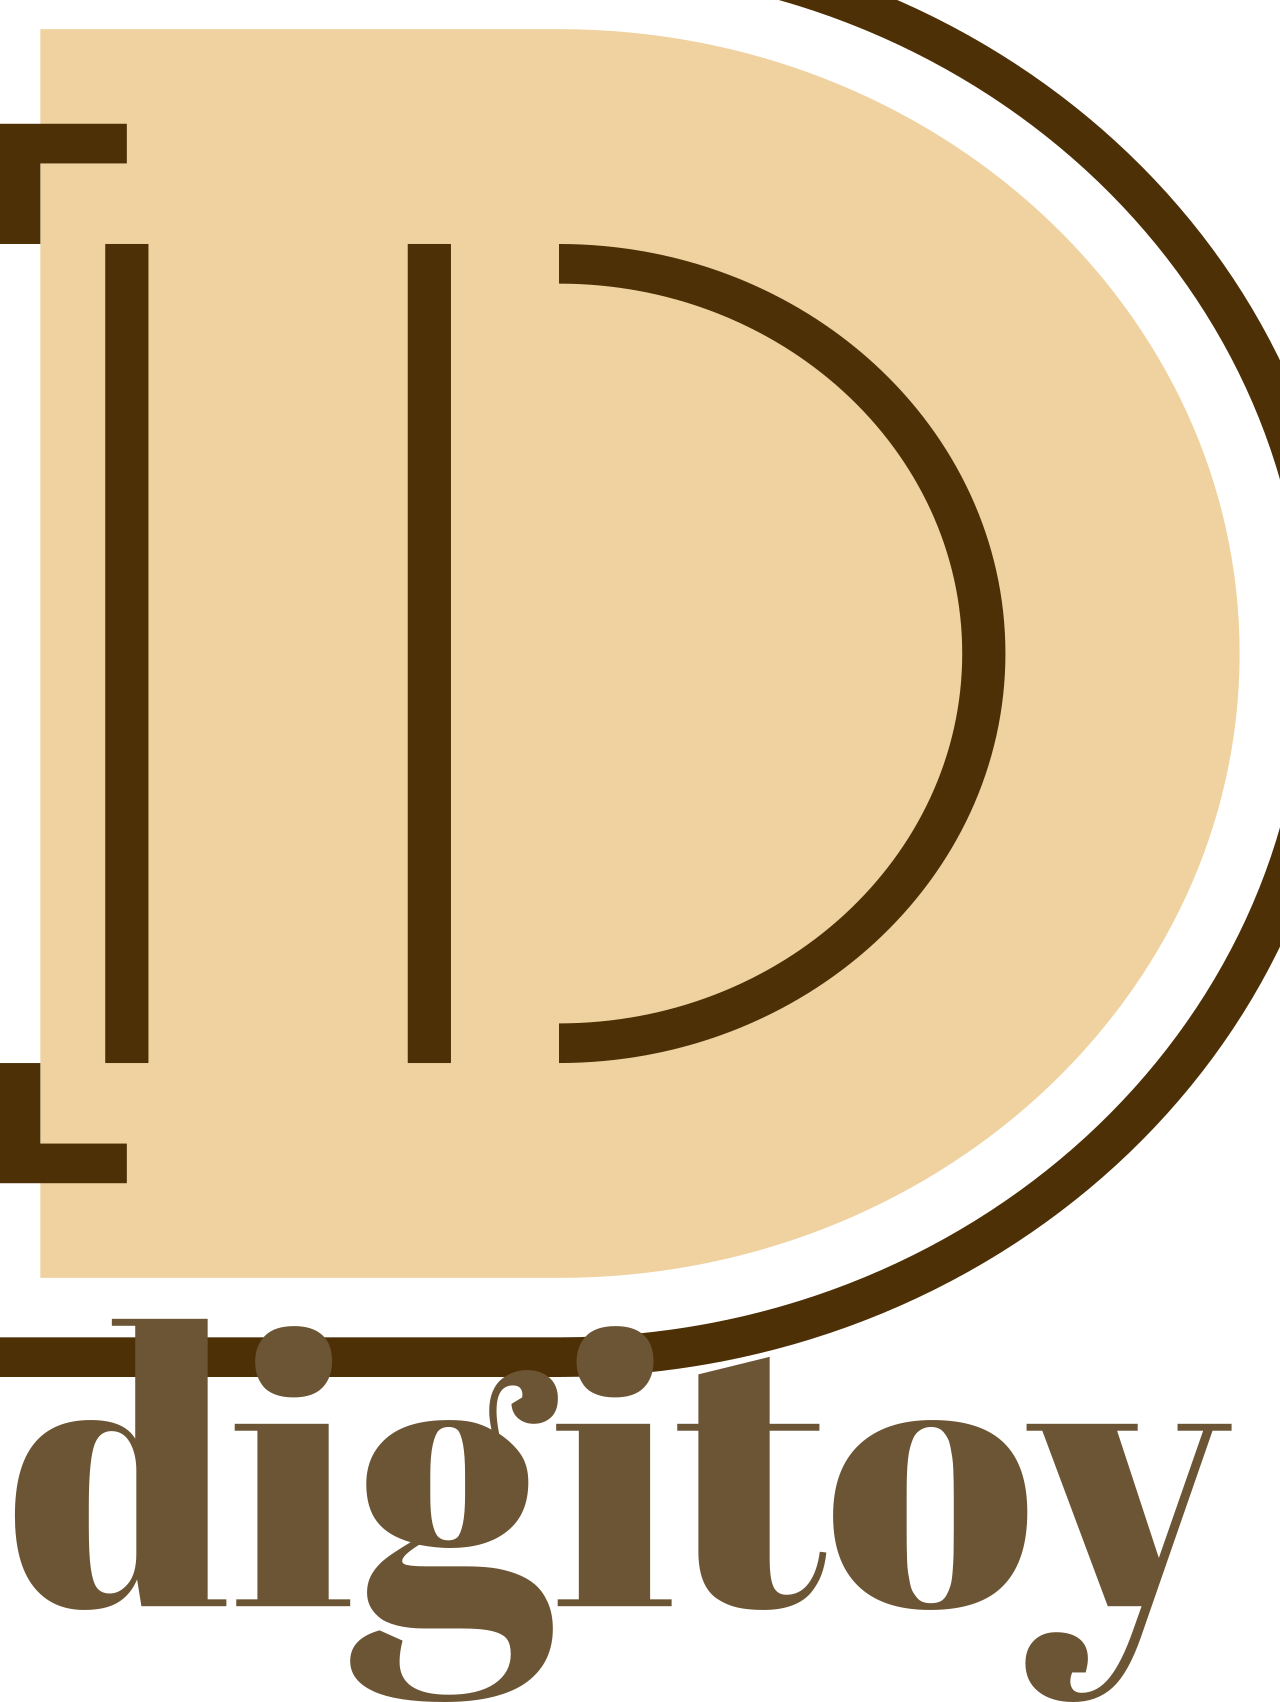 digitoy's logo